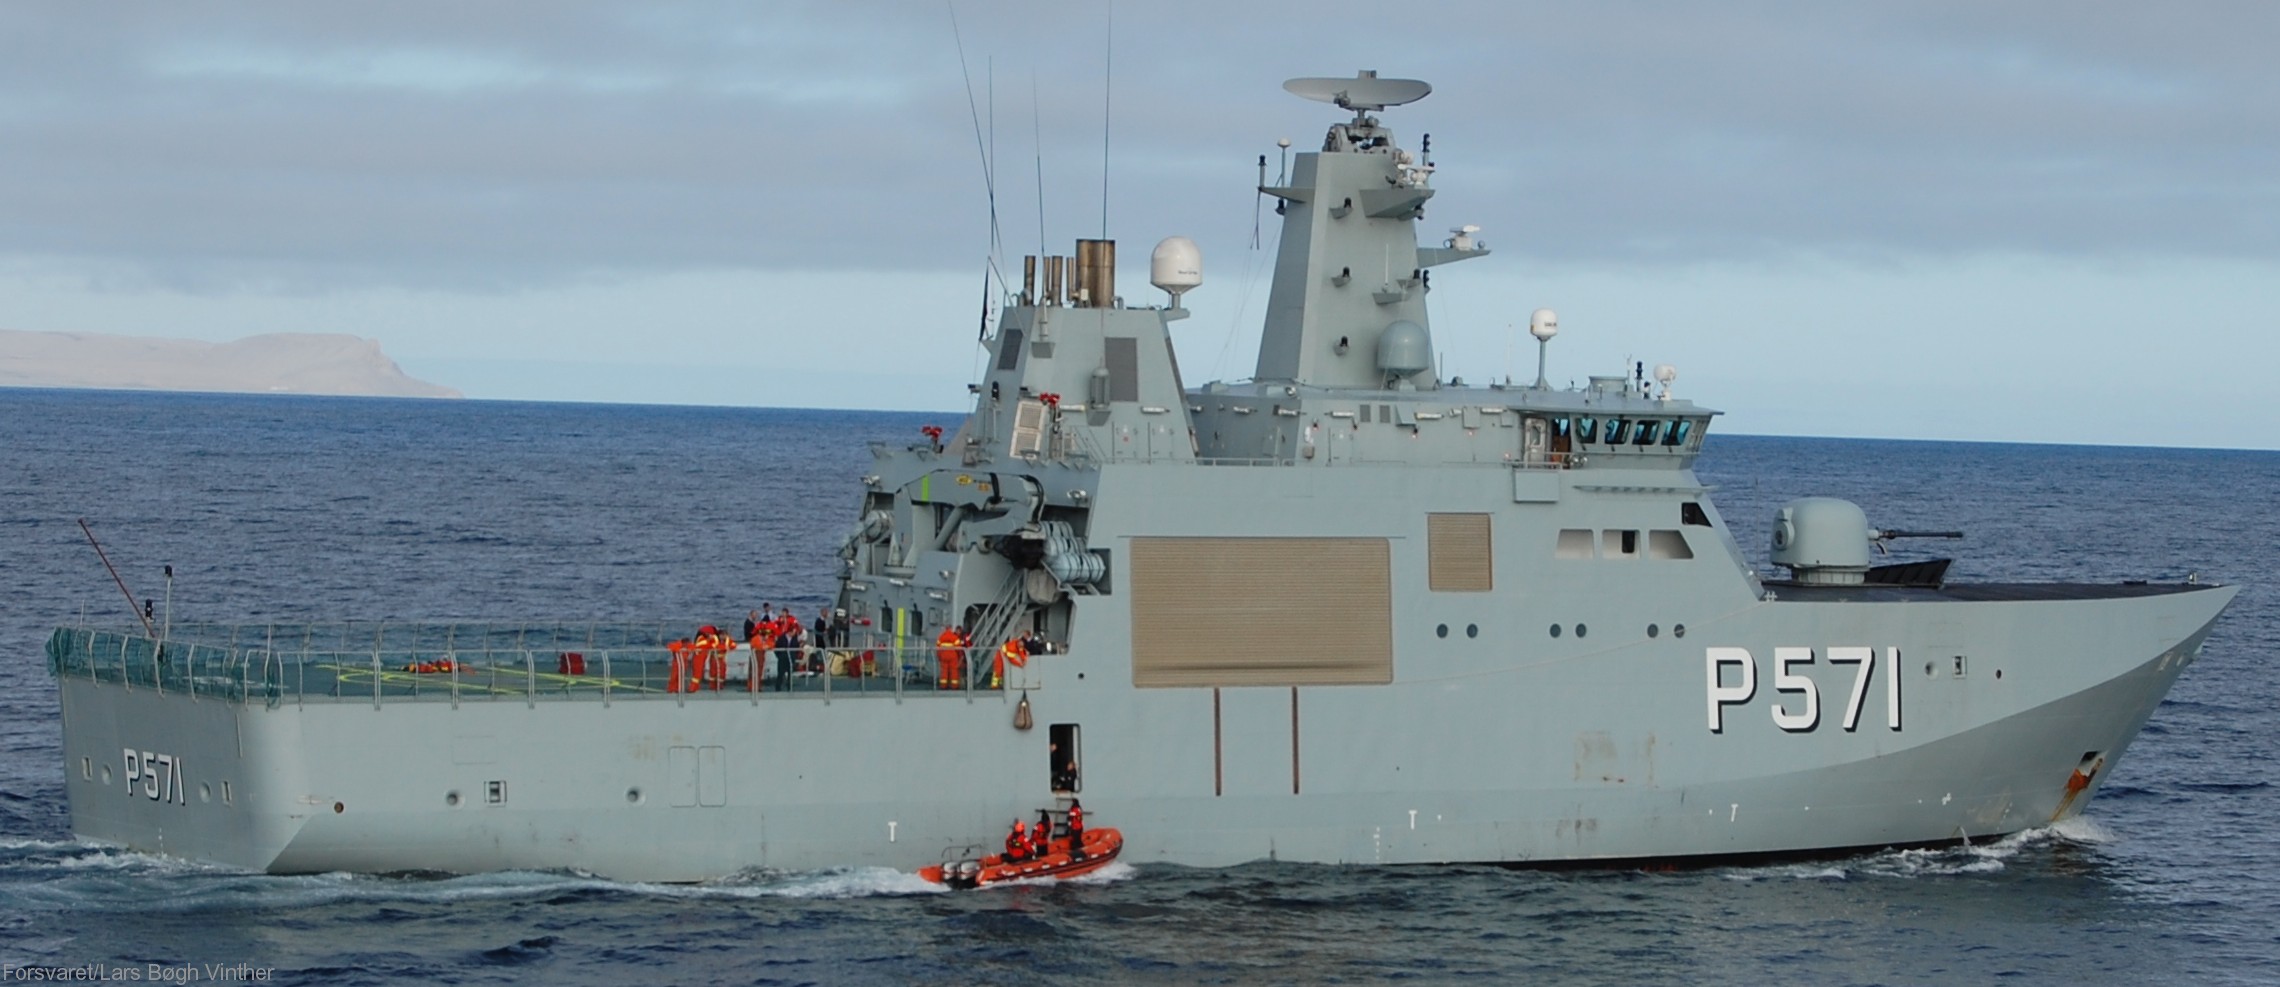 p-571 hdms ejnar mikkelsen knud rasmussen class offshore patrol vessel opv royal danish navy inspektionsfartøj 38